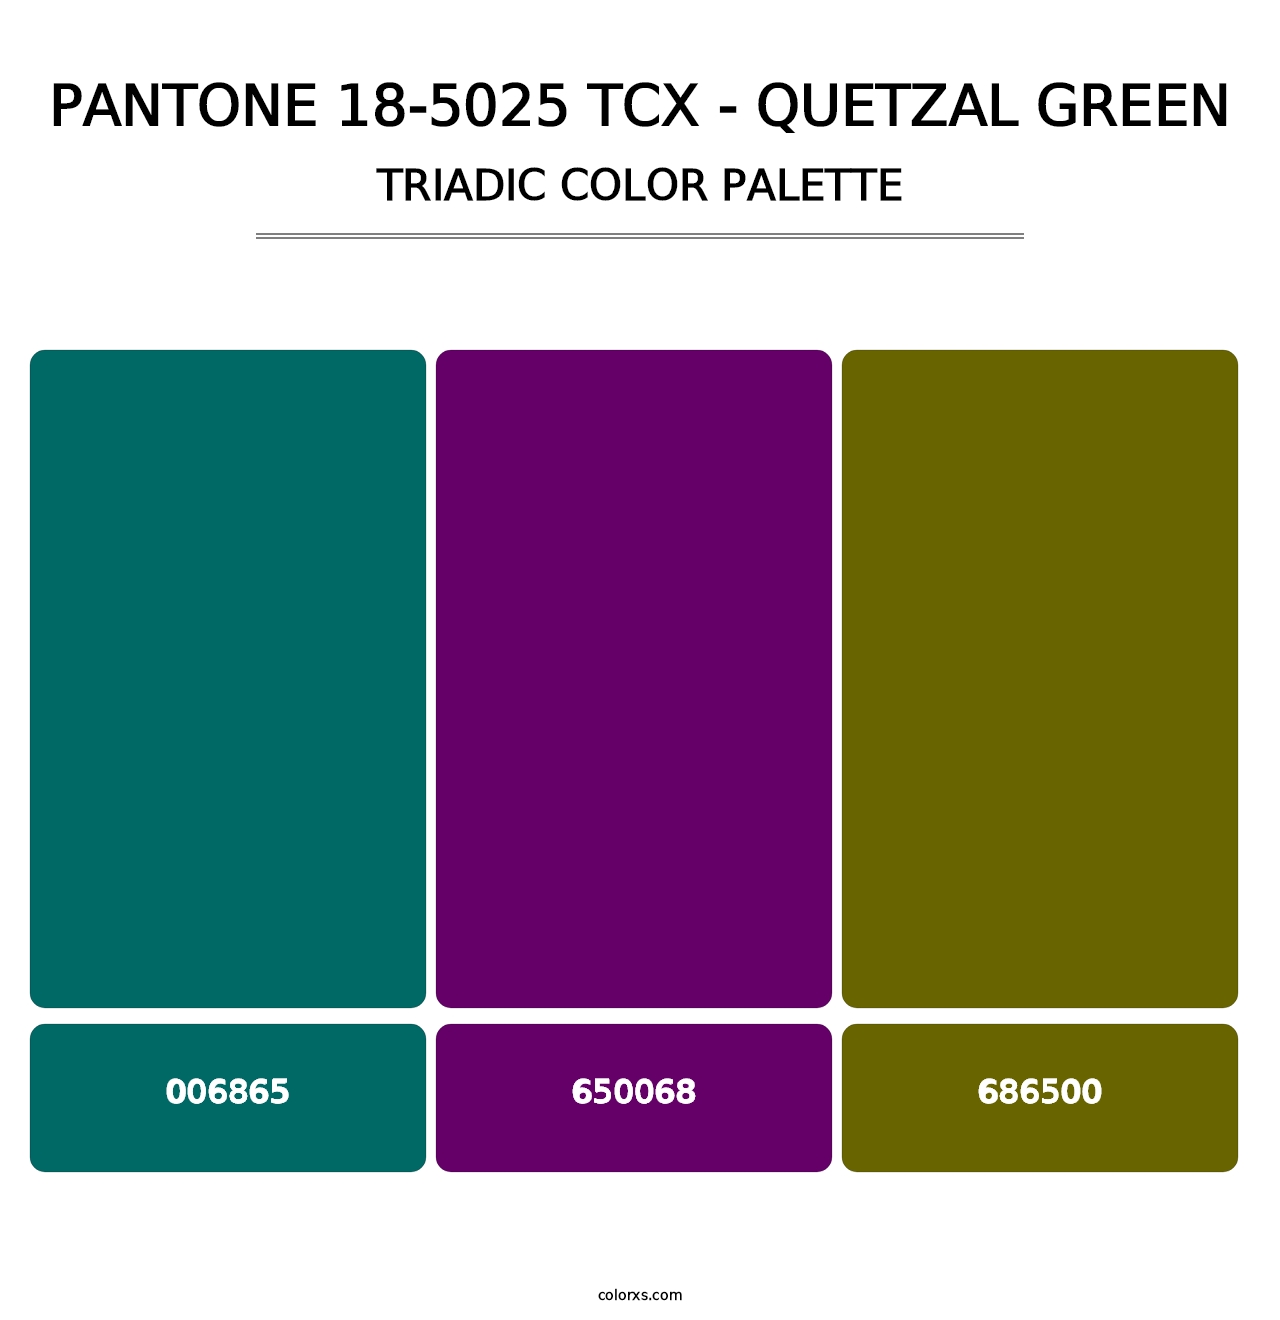 PANTONE 18-5025 TCX - Quetzal Green - Triadic Color Palette